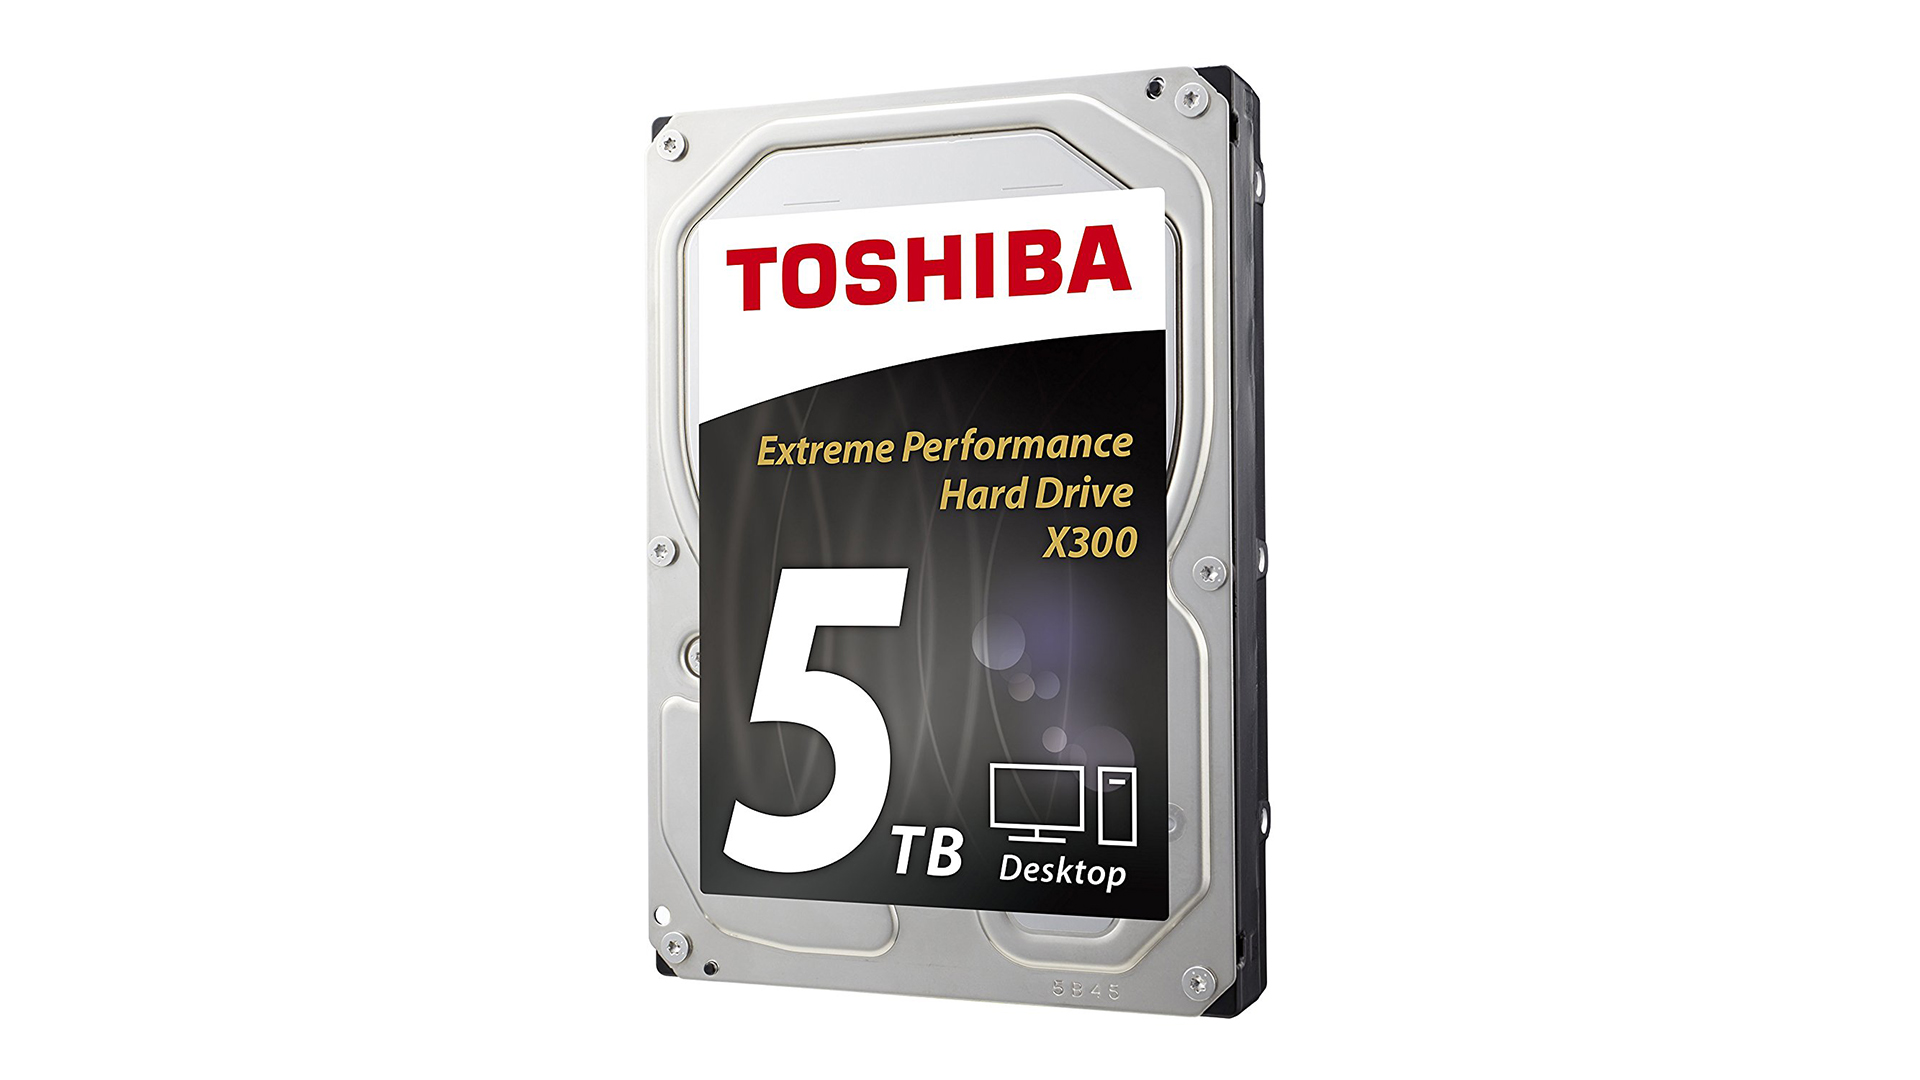 Best high capacity hard drive: Toshiba X300